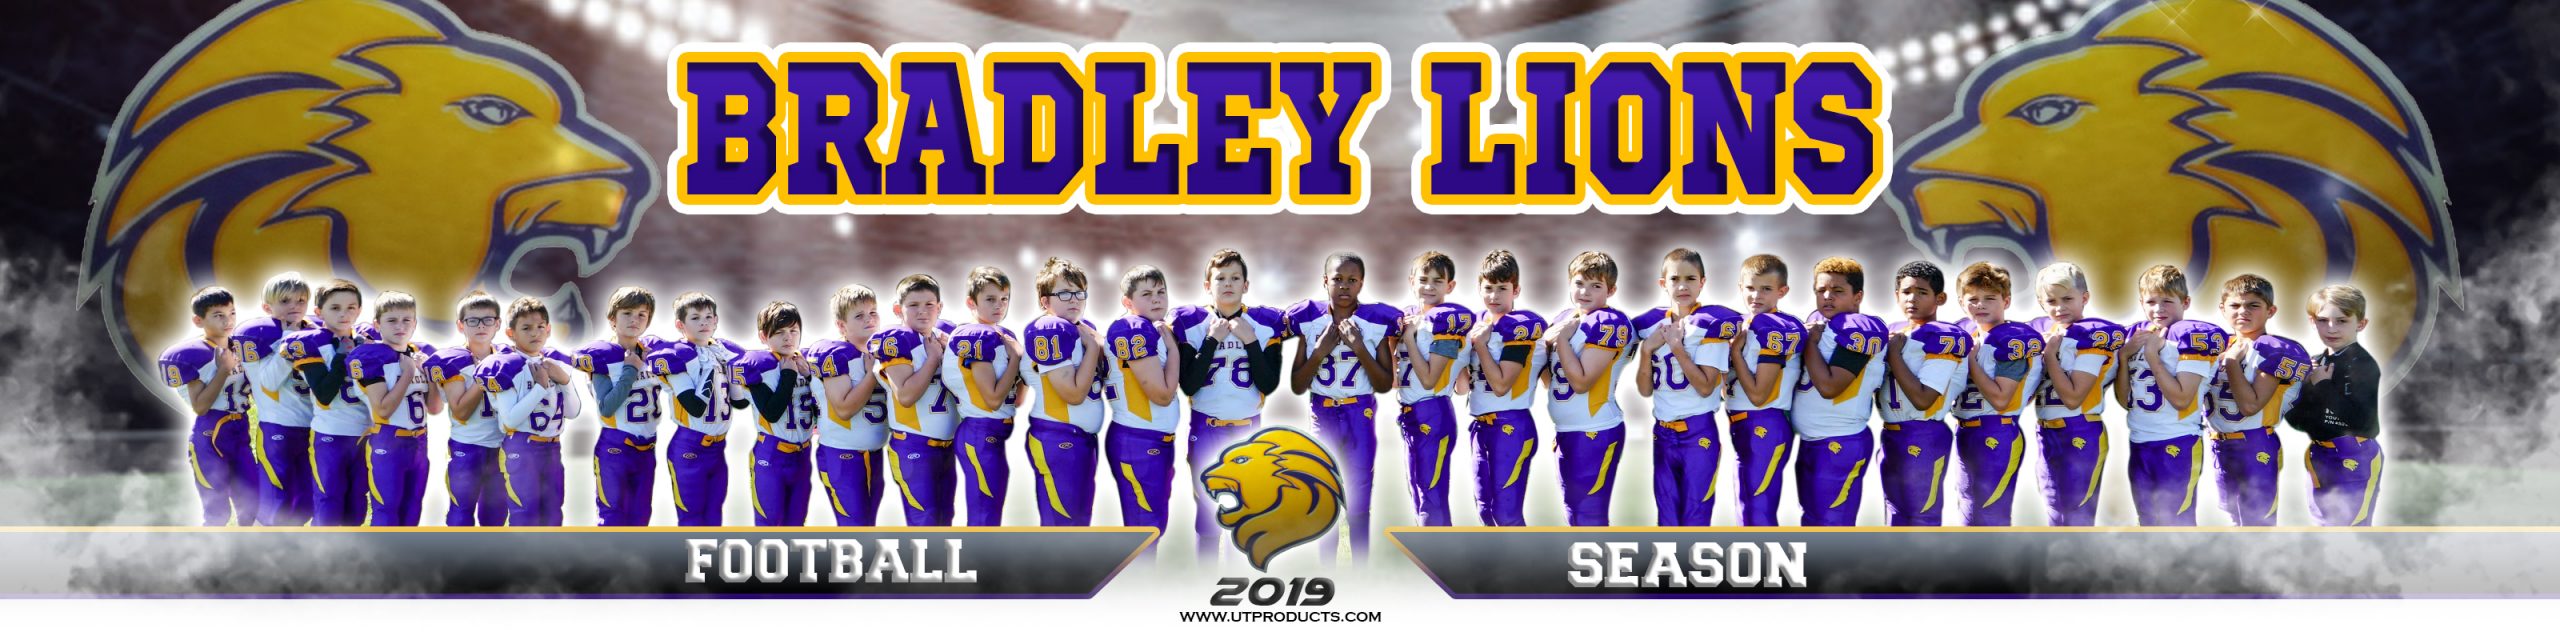 Bradley Lions